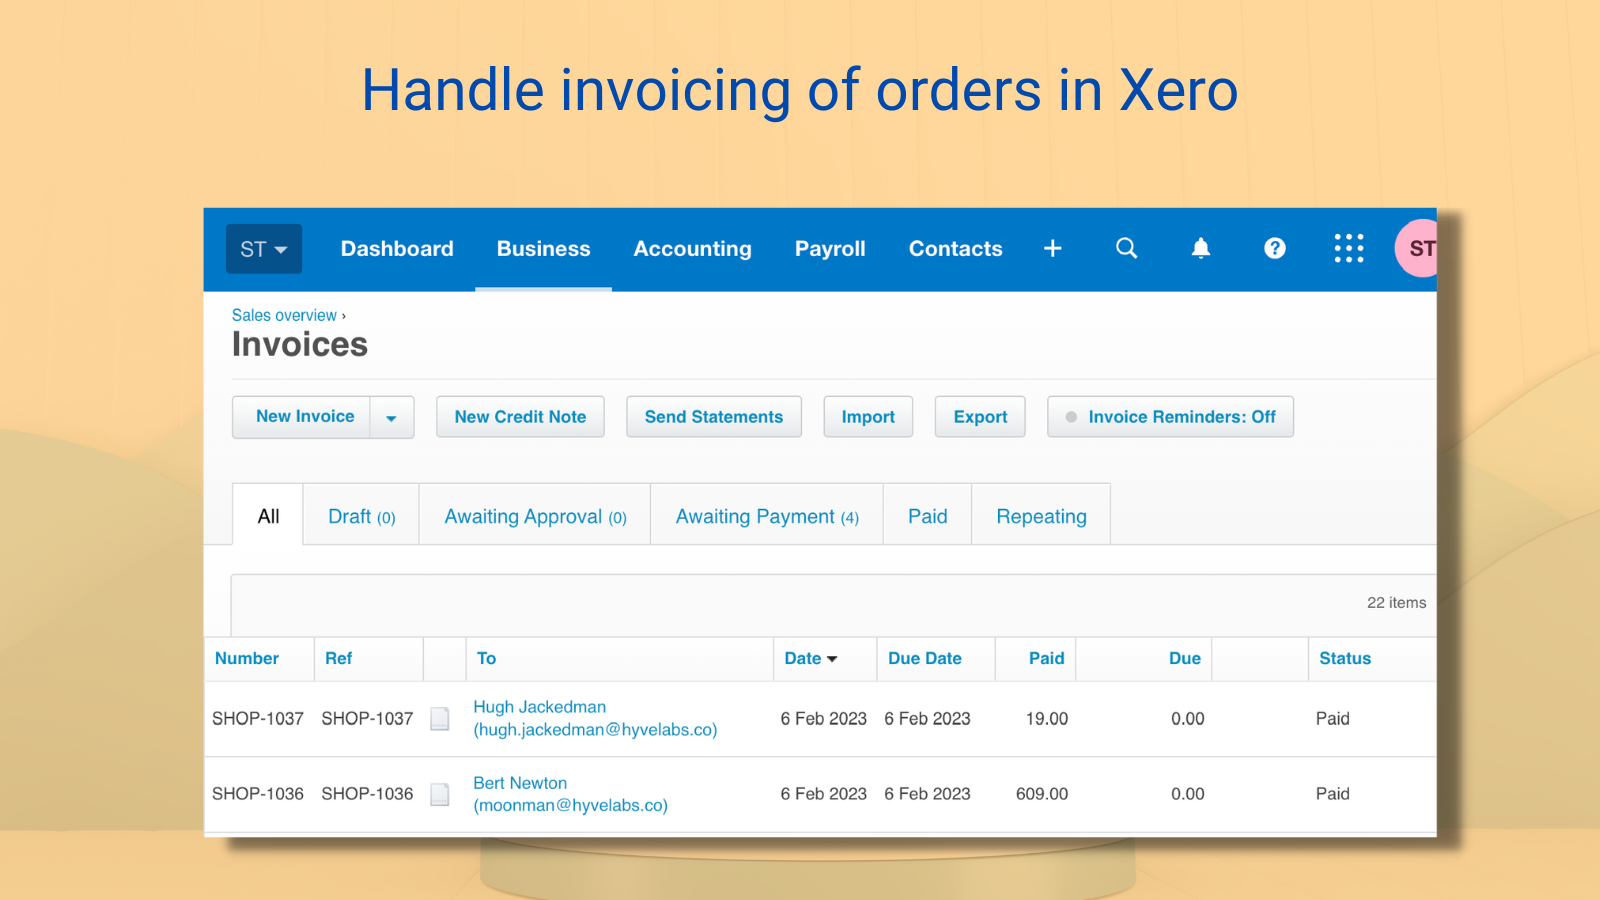 Handle invoicing of orders in Xero